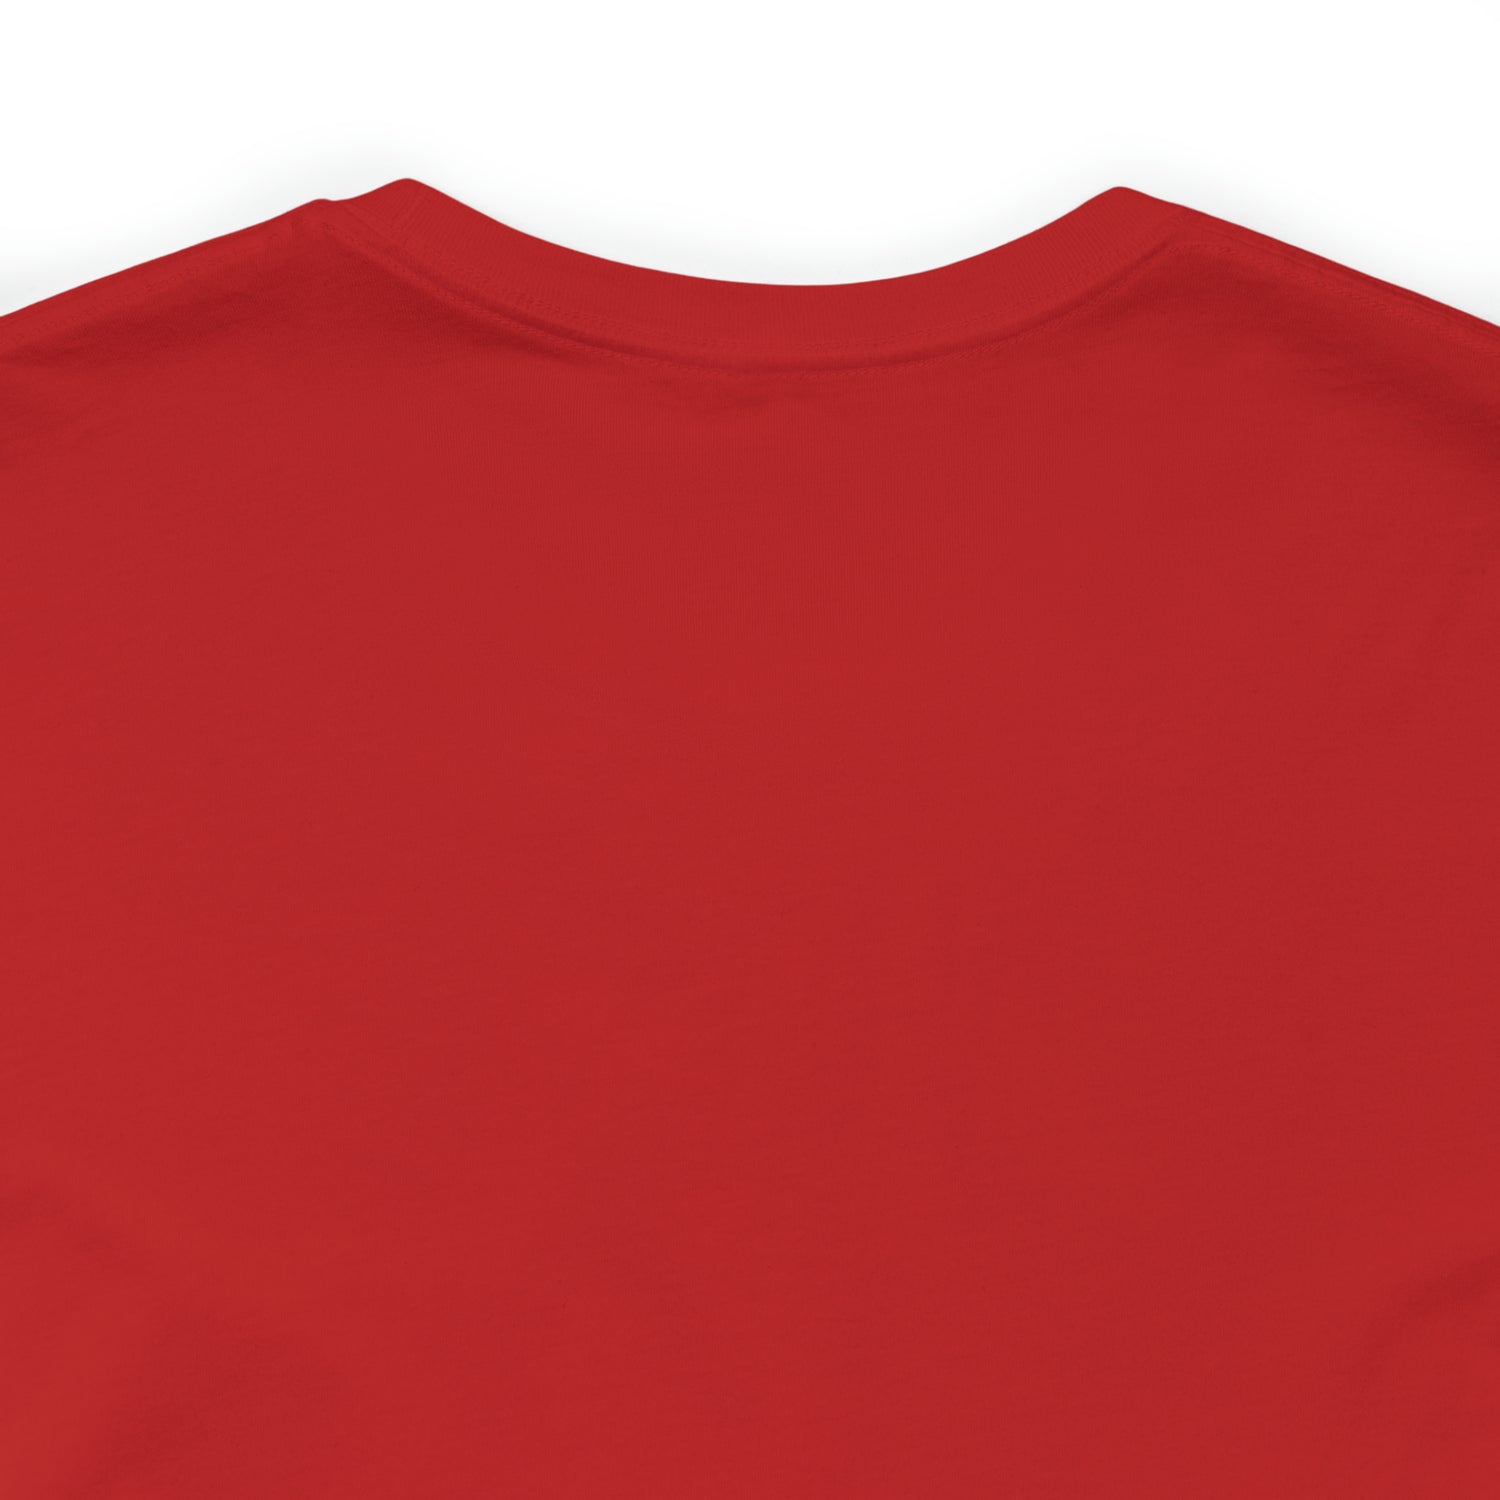 Yoga T-Shirt | For Yoga Lovers T-Shirt Petrova Designs